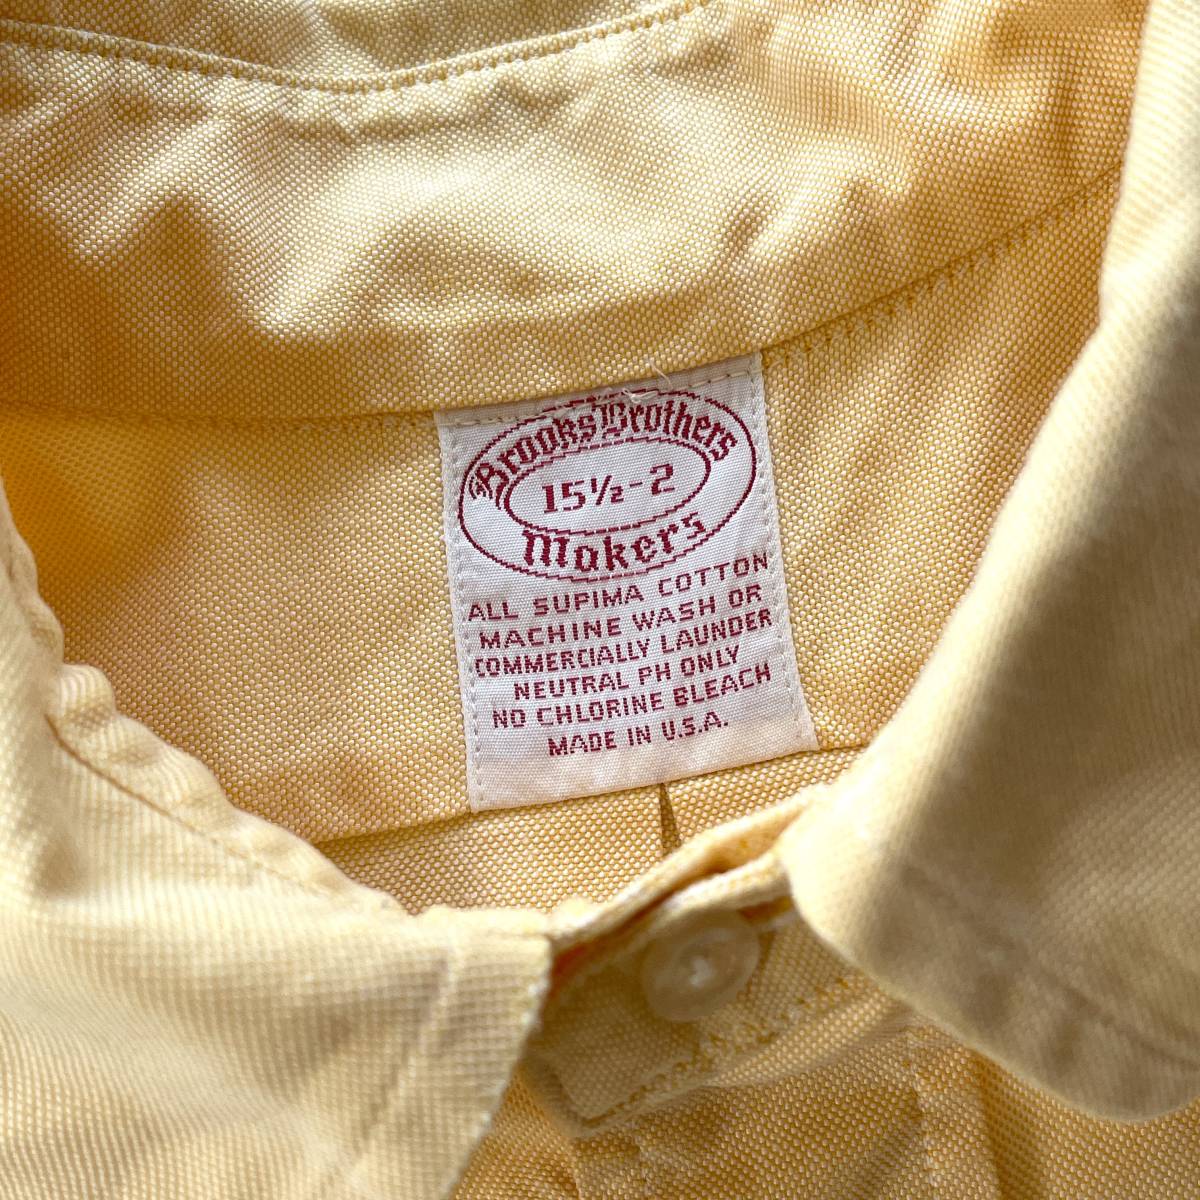 【Vintage】Brooks Brothers ボタンダウンシャツ 15 1/2 - 2 オックスフォード イエロー ブルックスブラザーズ ダンリバー MADE IN USA_画像2